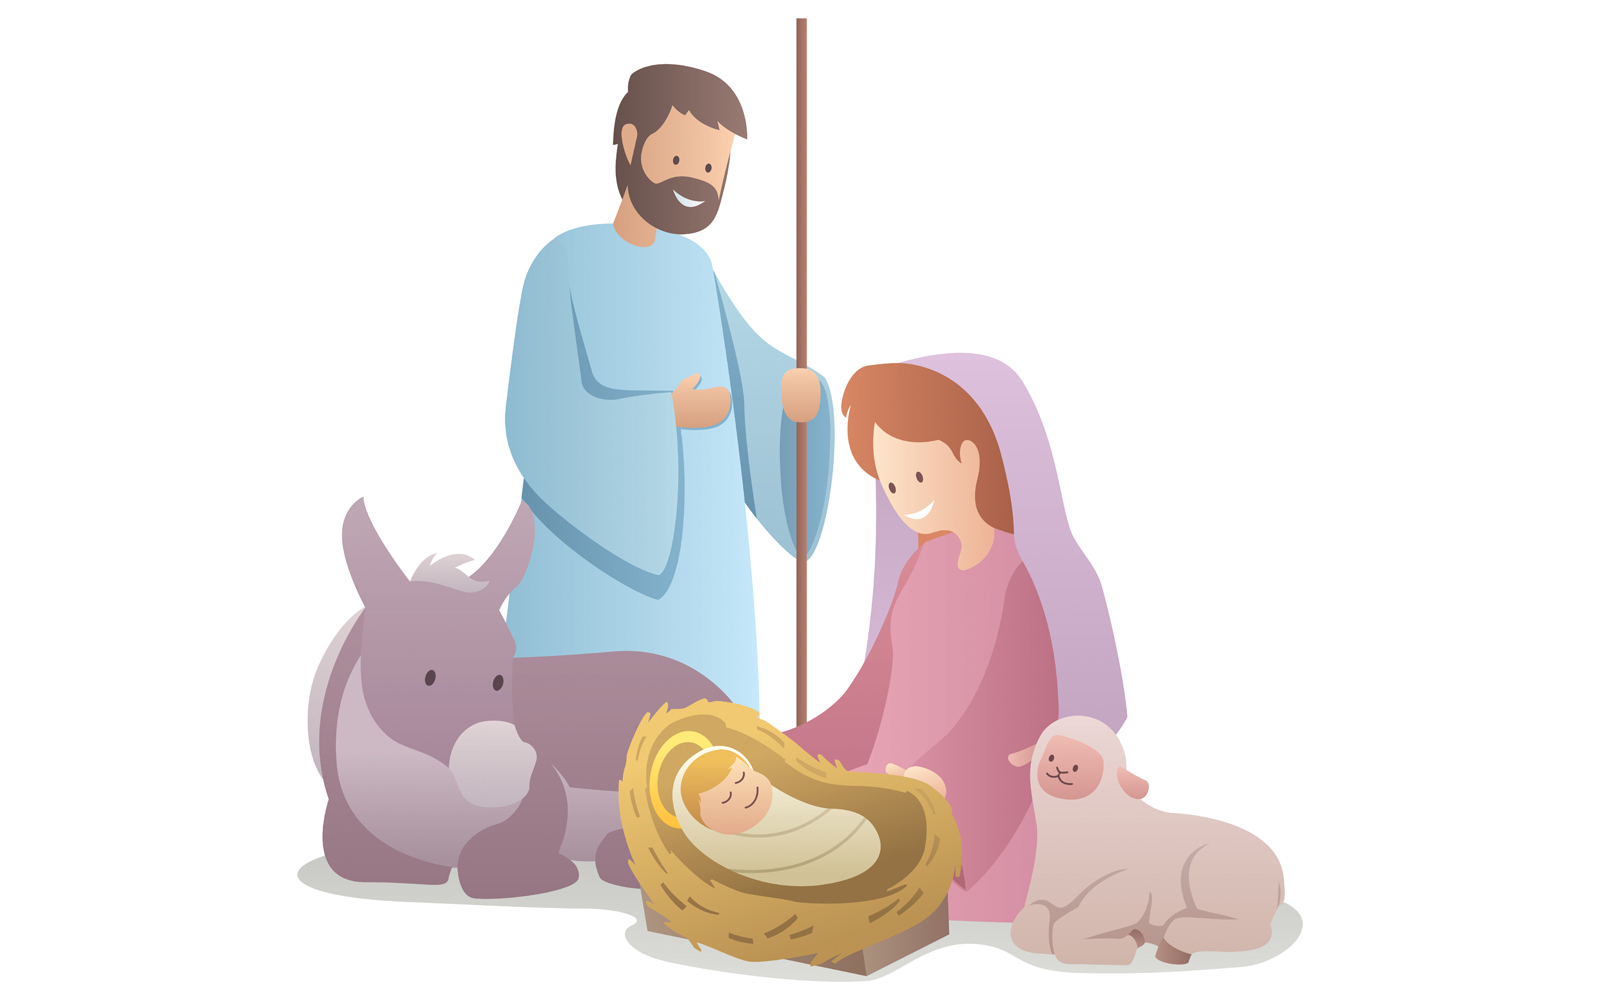 Nativity Scene on White - Illustration